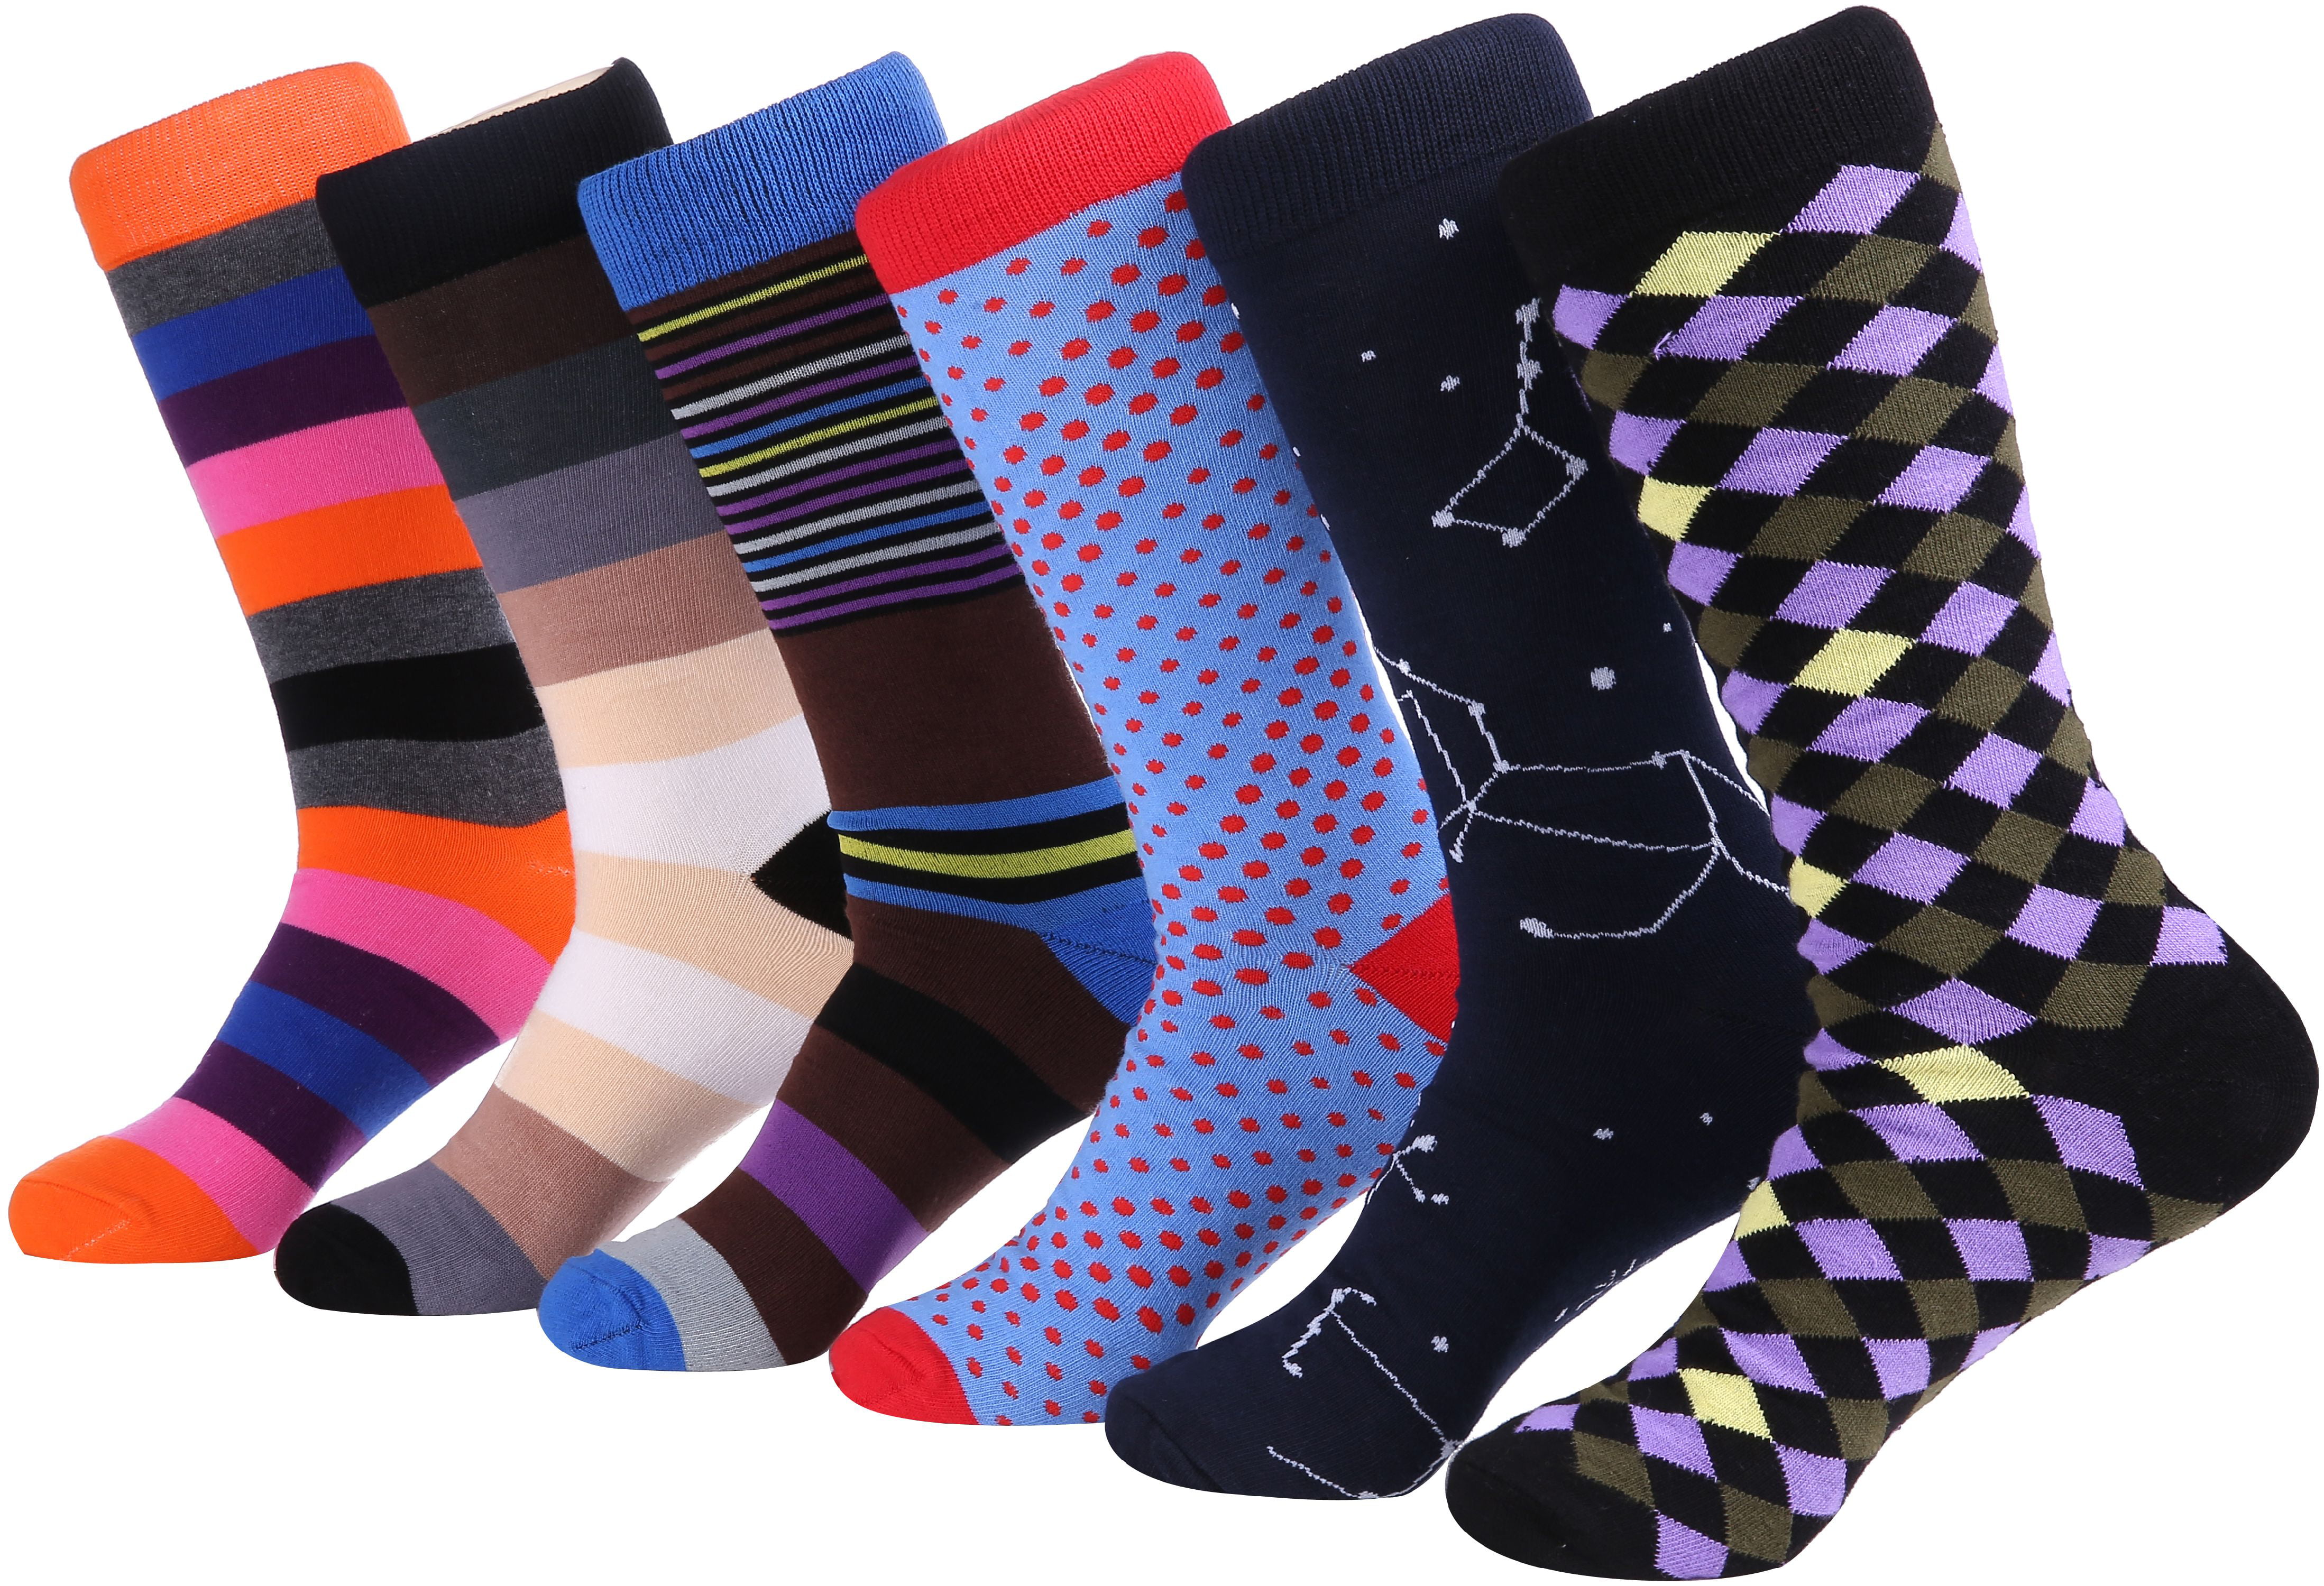 Marino Mens Dress Socks - Fun Colorful Socks for Men - Cotton Funky Socks -  6 Pack 